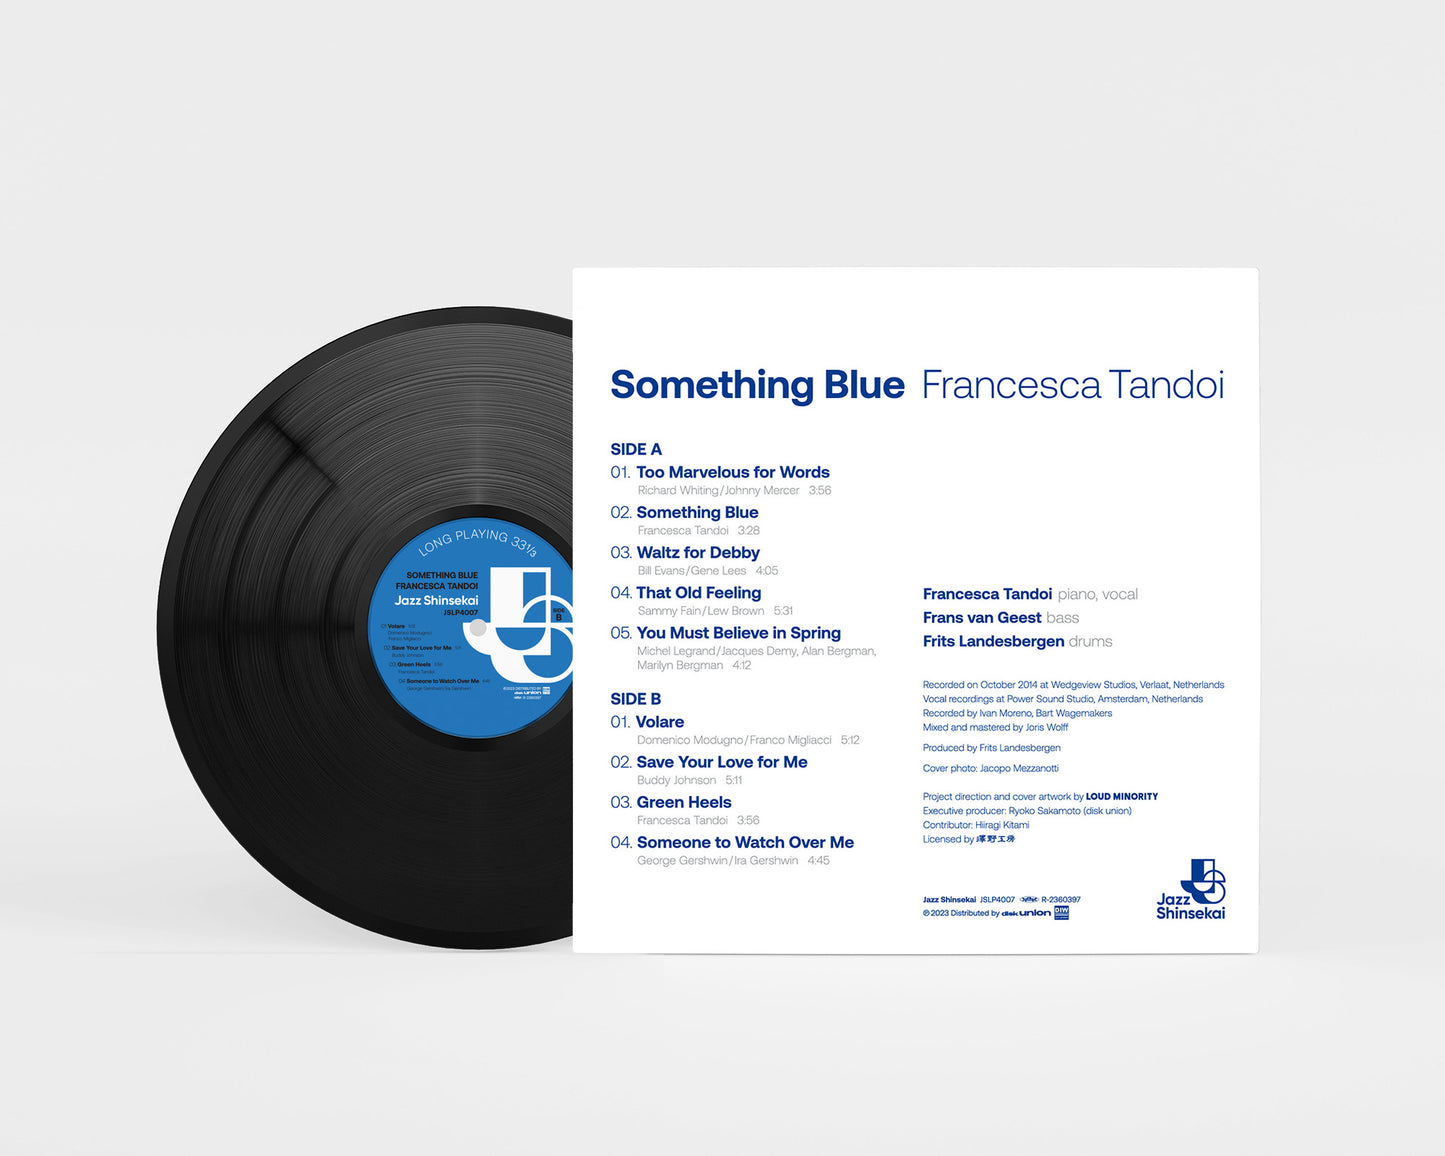 SOMETHING BLUE (LP) - FRANCESCA TANDOI TRIO